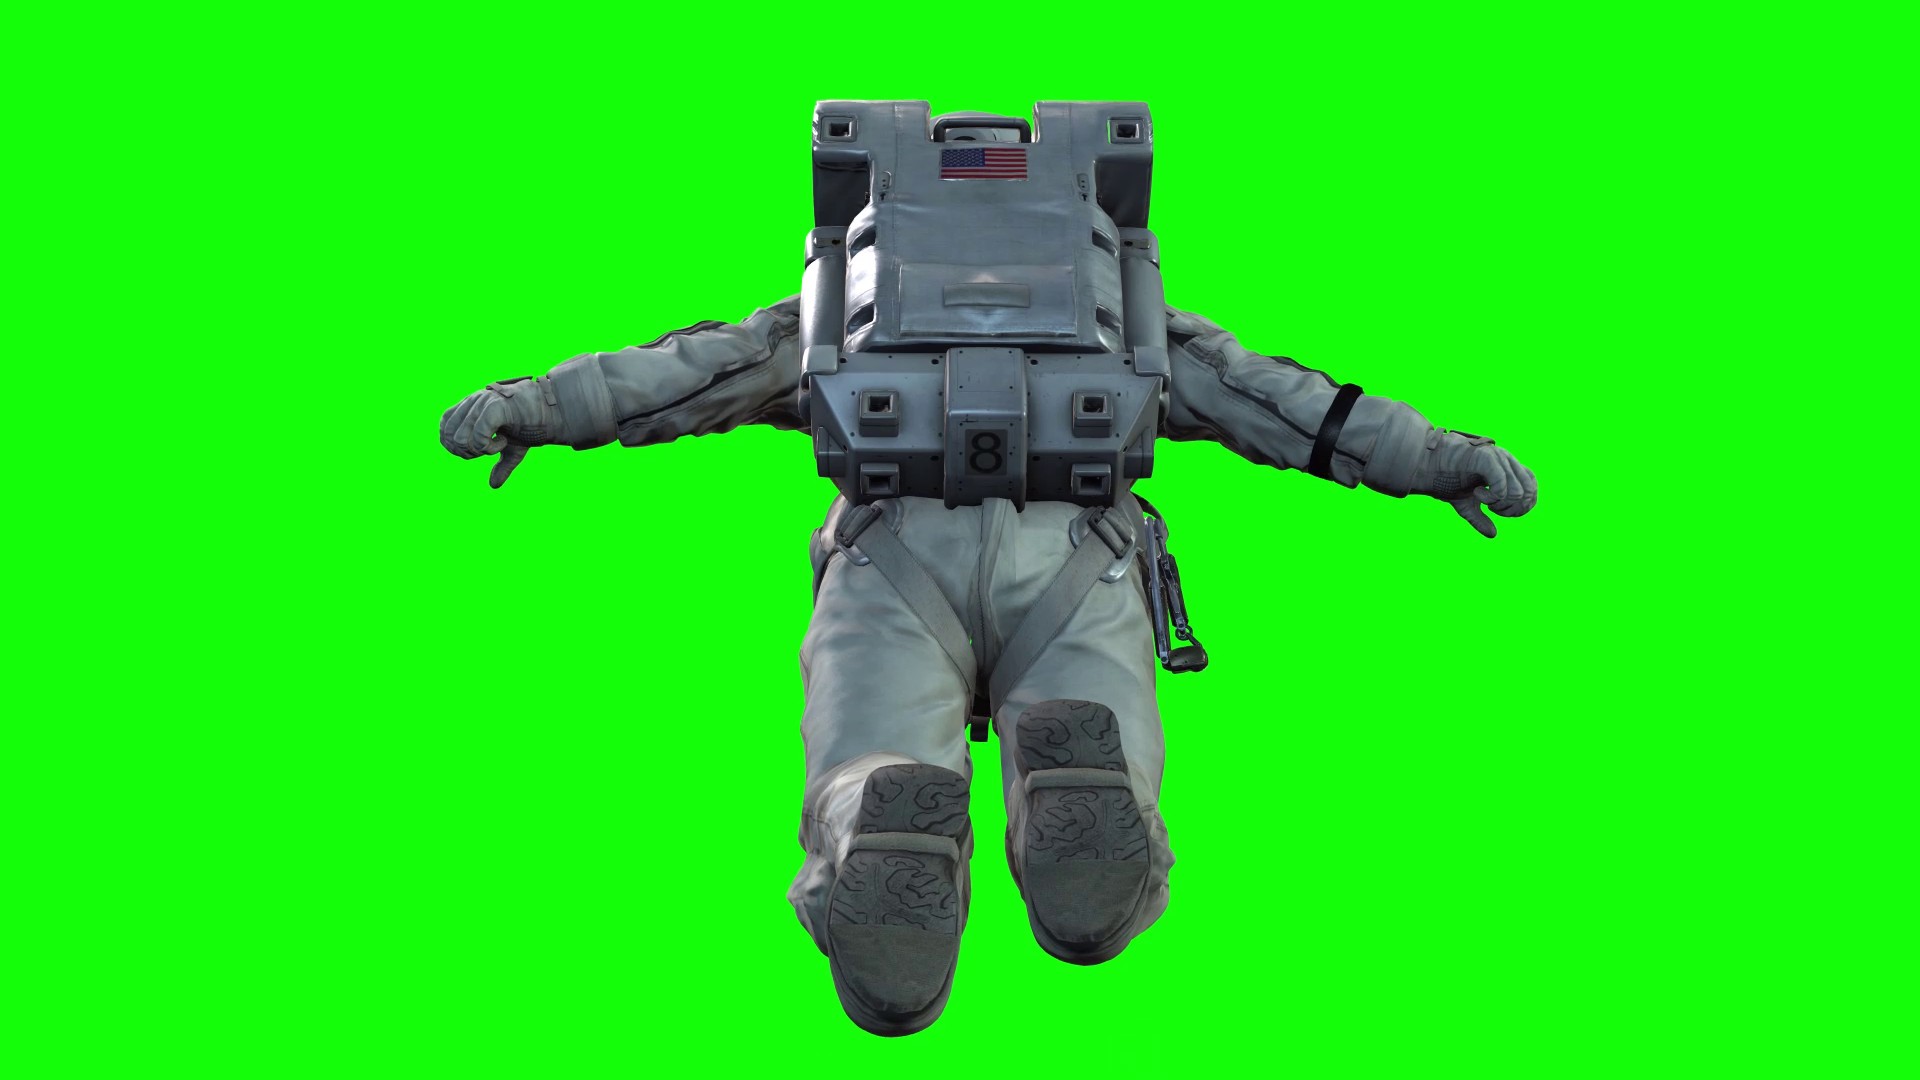 space suit chromakey